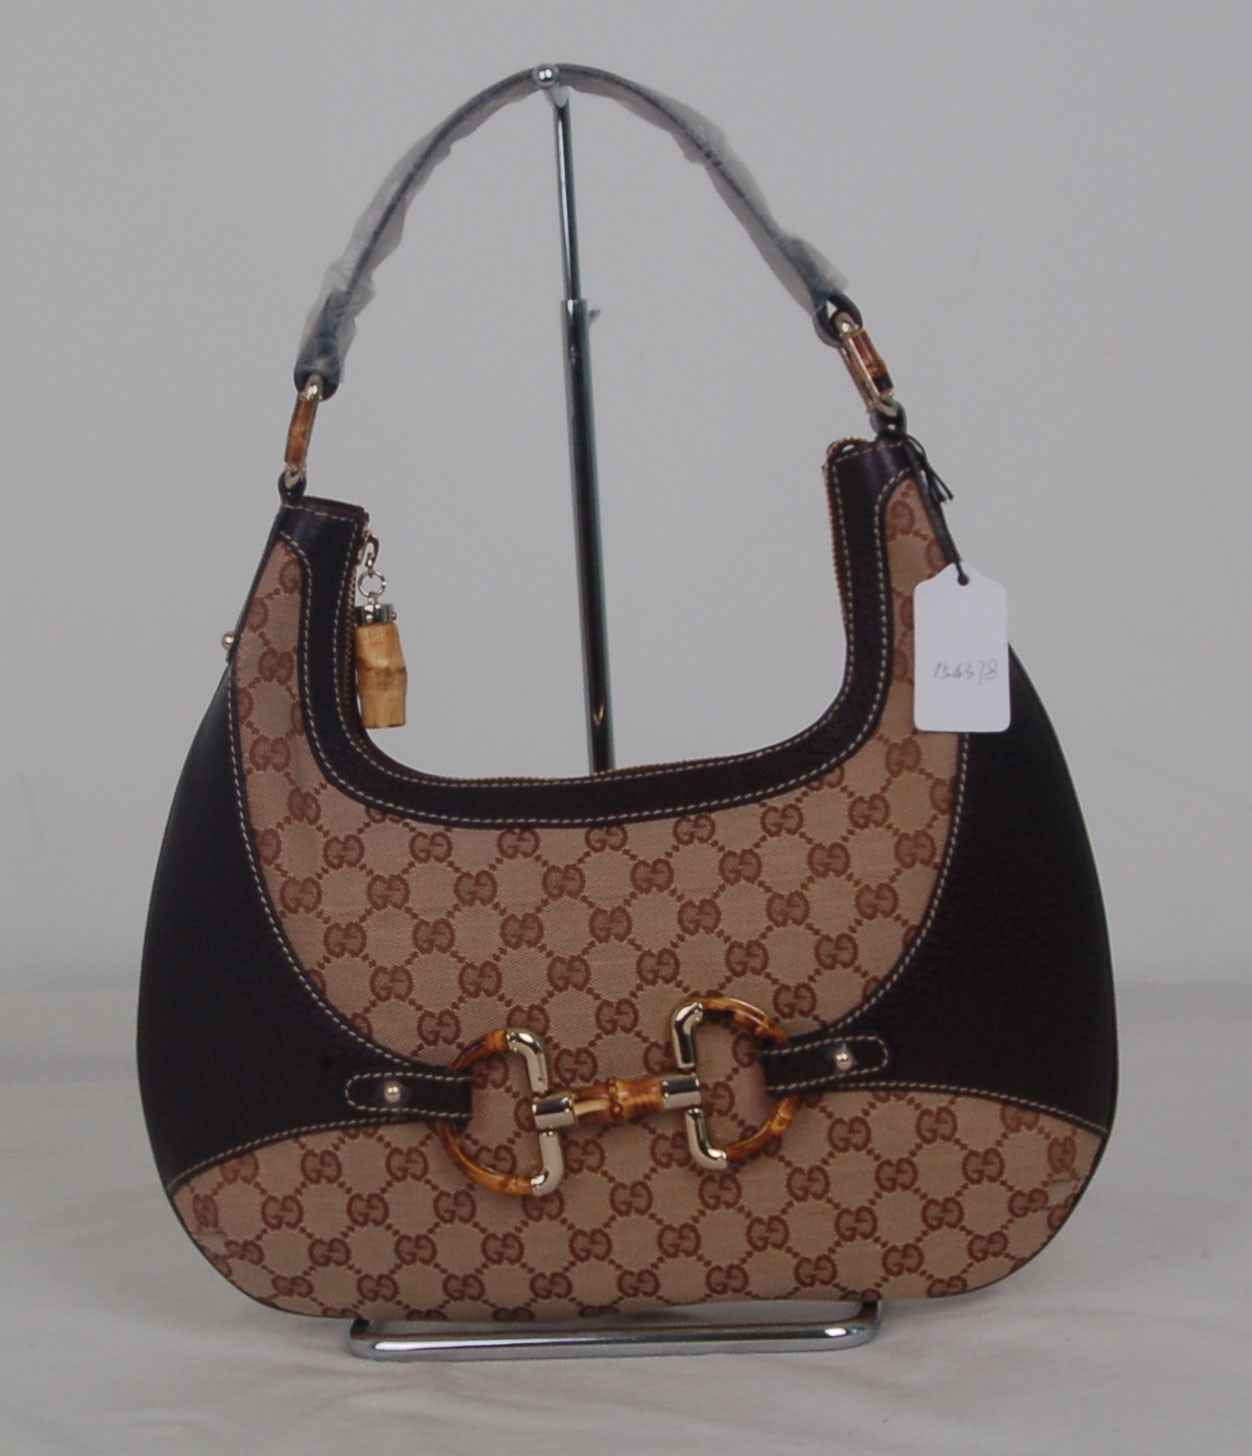 Gucci Latest Handbags Collection For 2010 - 11 - www.semadata.org